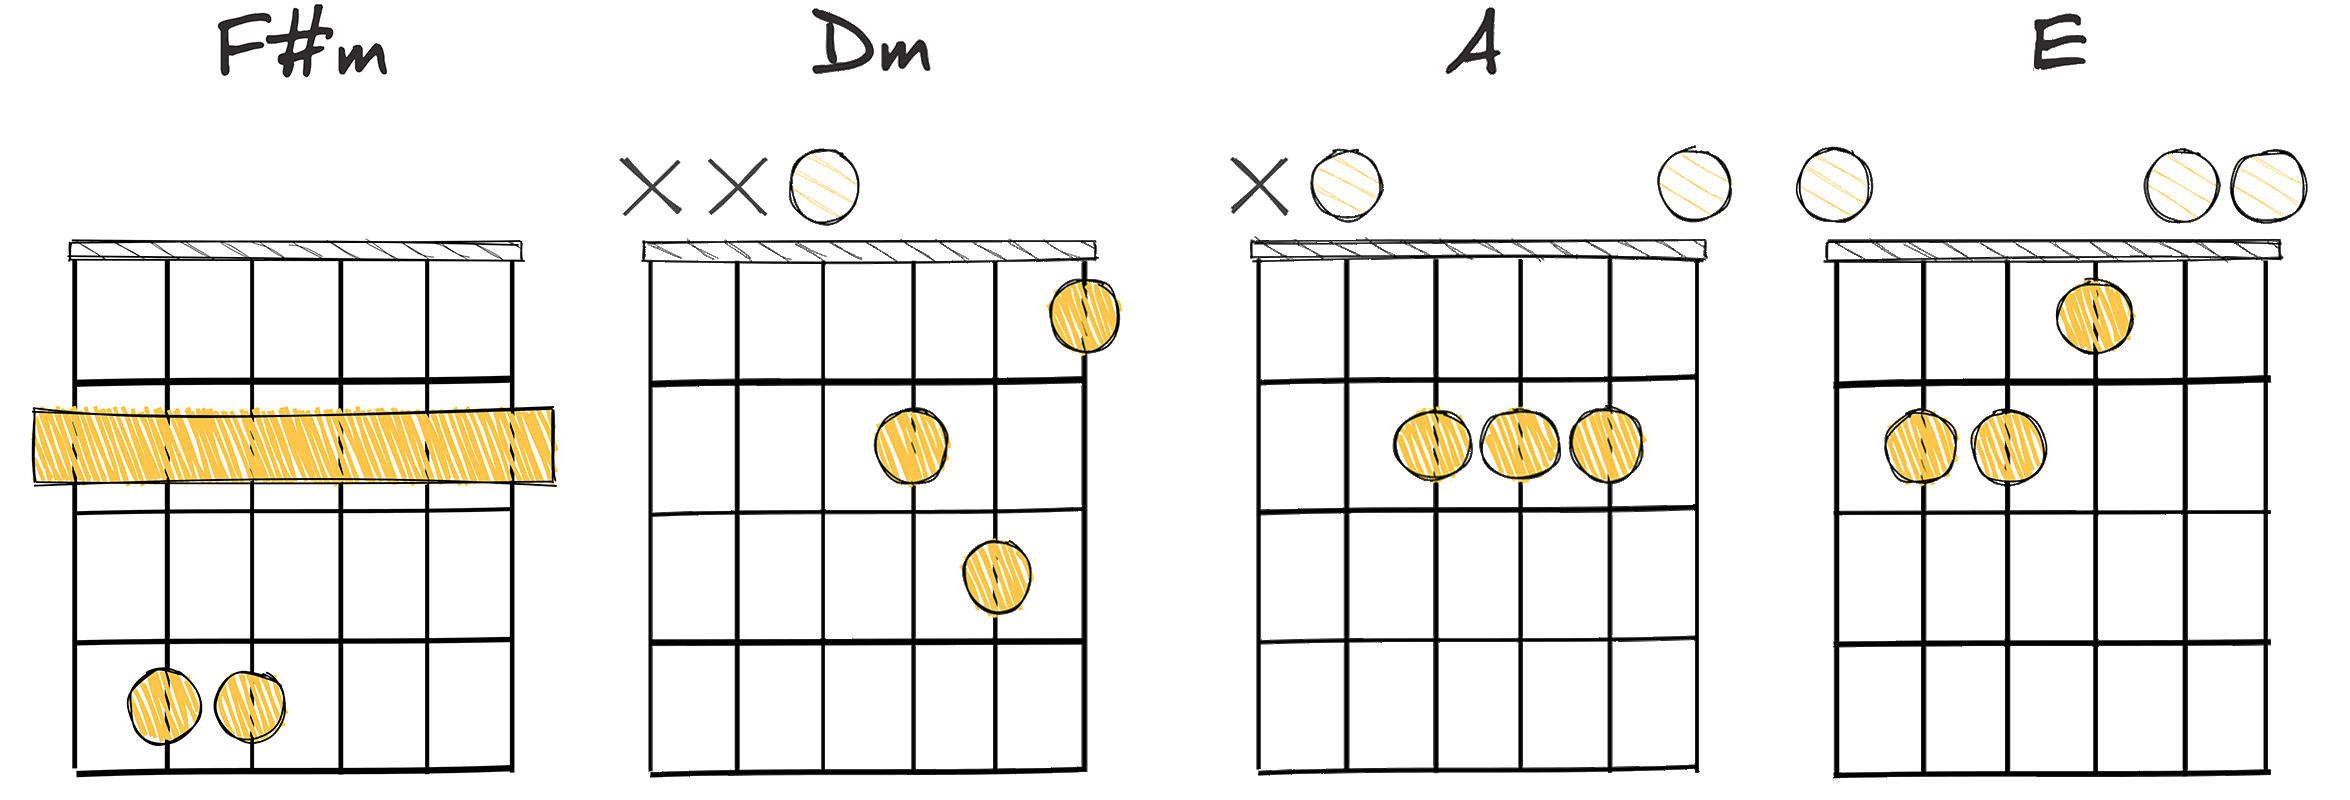 vi-IV-I-V (6-4-1-5) chords diagram